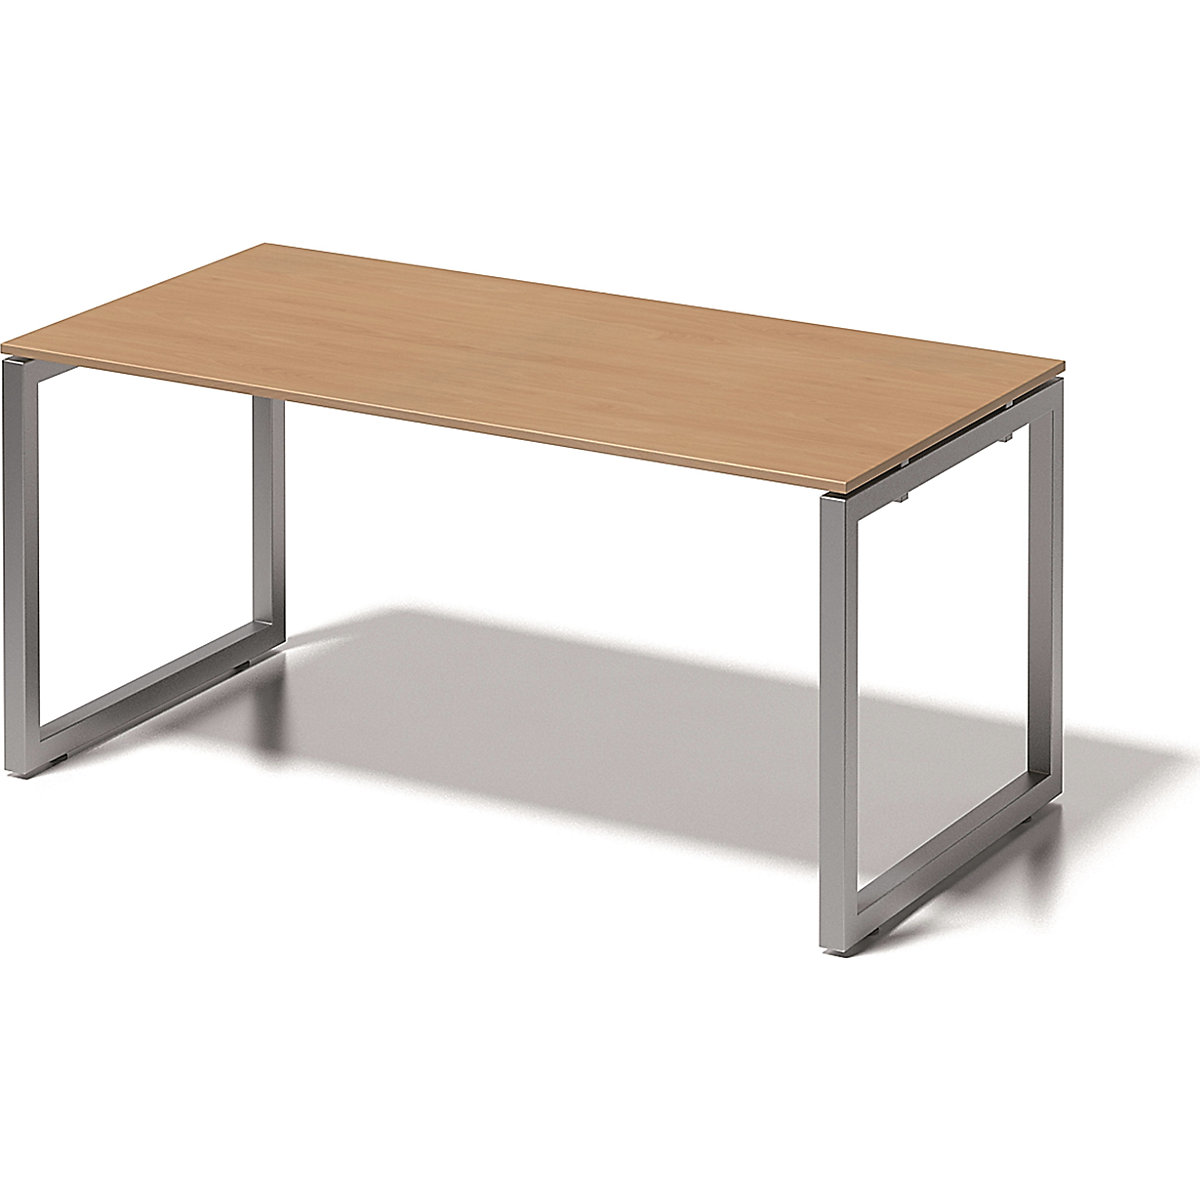 CITO desk, O-frame – BISLEY, HxWxD 740 x 1600 x 800 mm, silver frame, beech tabletop-8